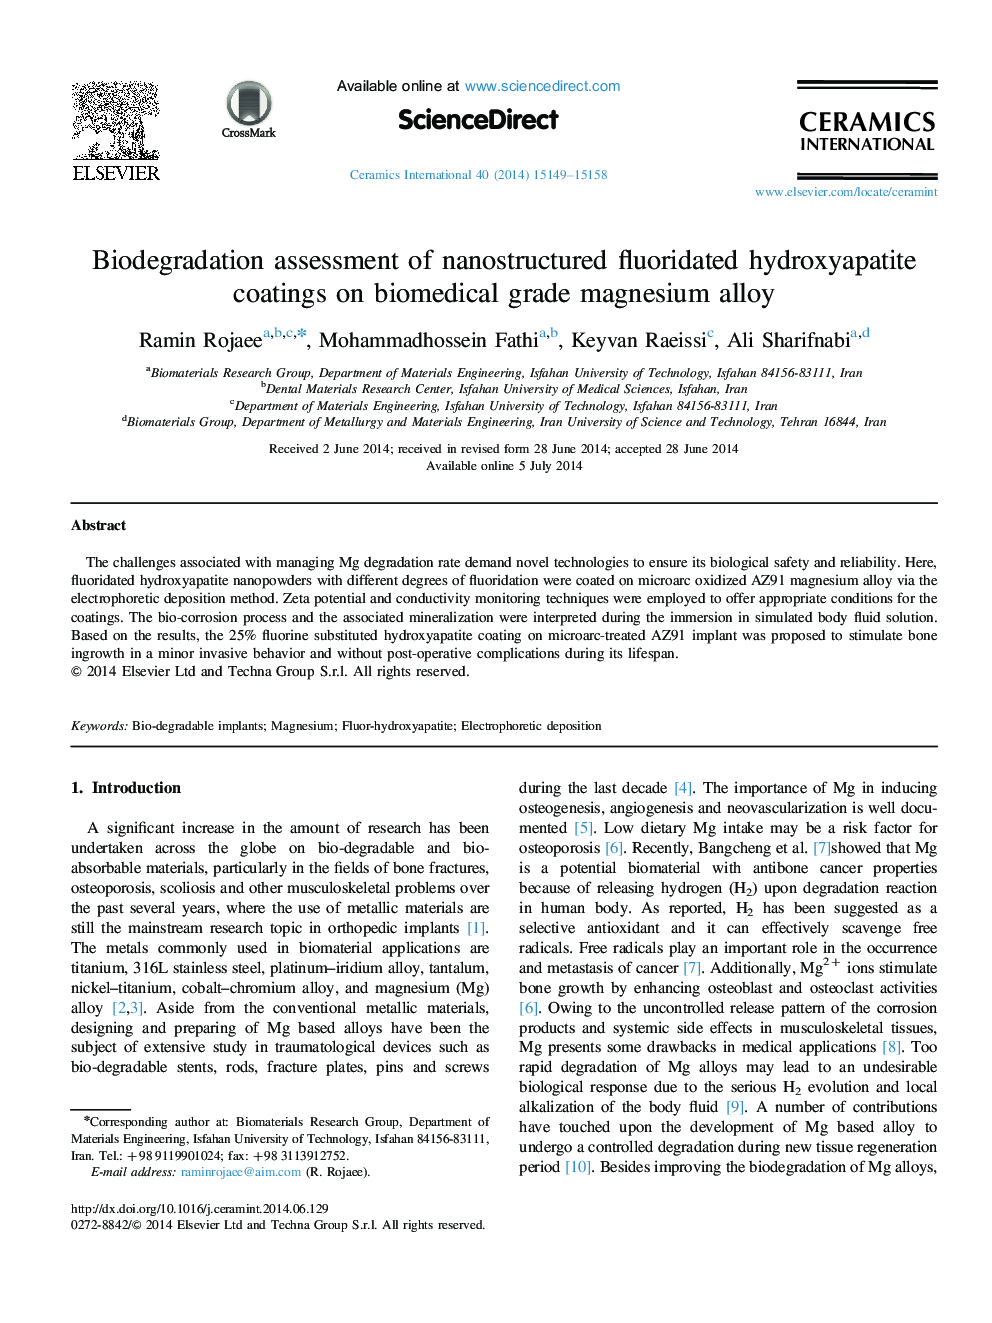 Biodegradation assessment of nanostructured fluoridated hydroxyapatite coatings on biomedical grade magnesium alloy